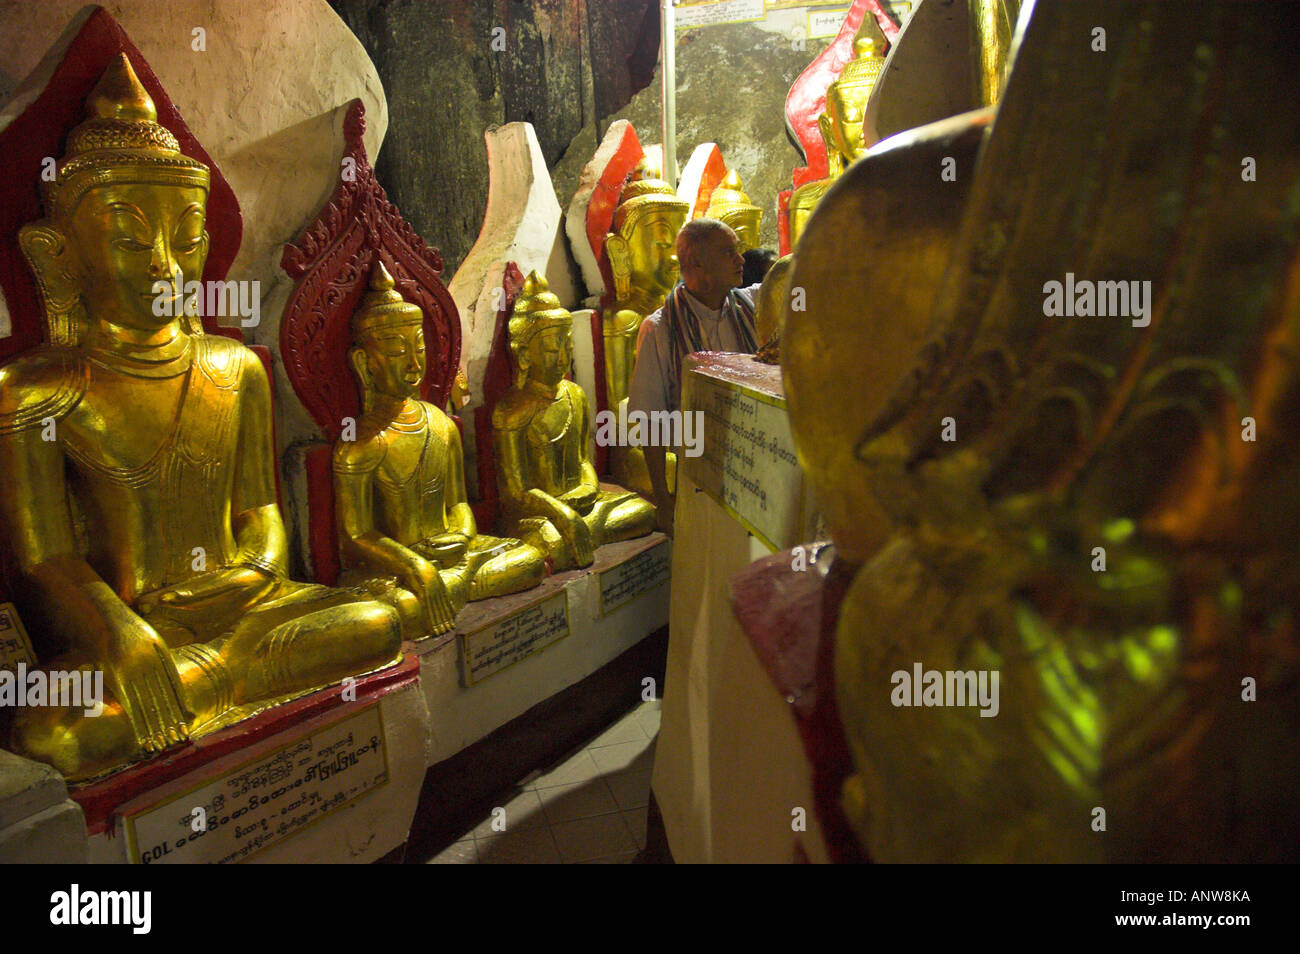 Myanmar Burma Shan State Pindaya Pindaya Natural Cave Museum view with several golden budha figures in artificial light with vis Stock Photo